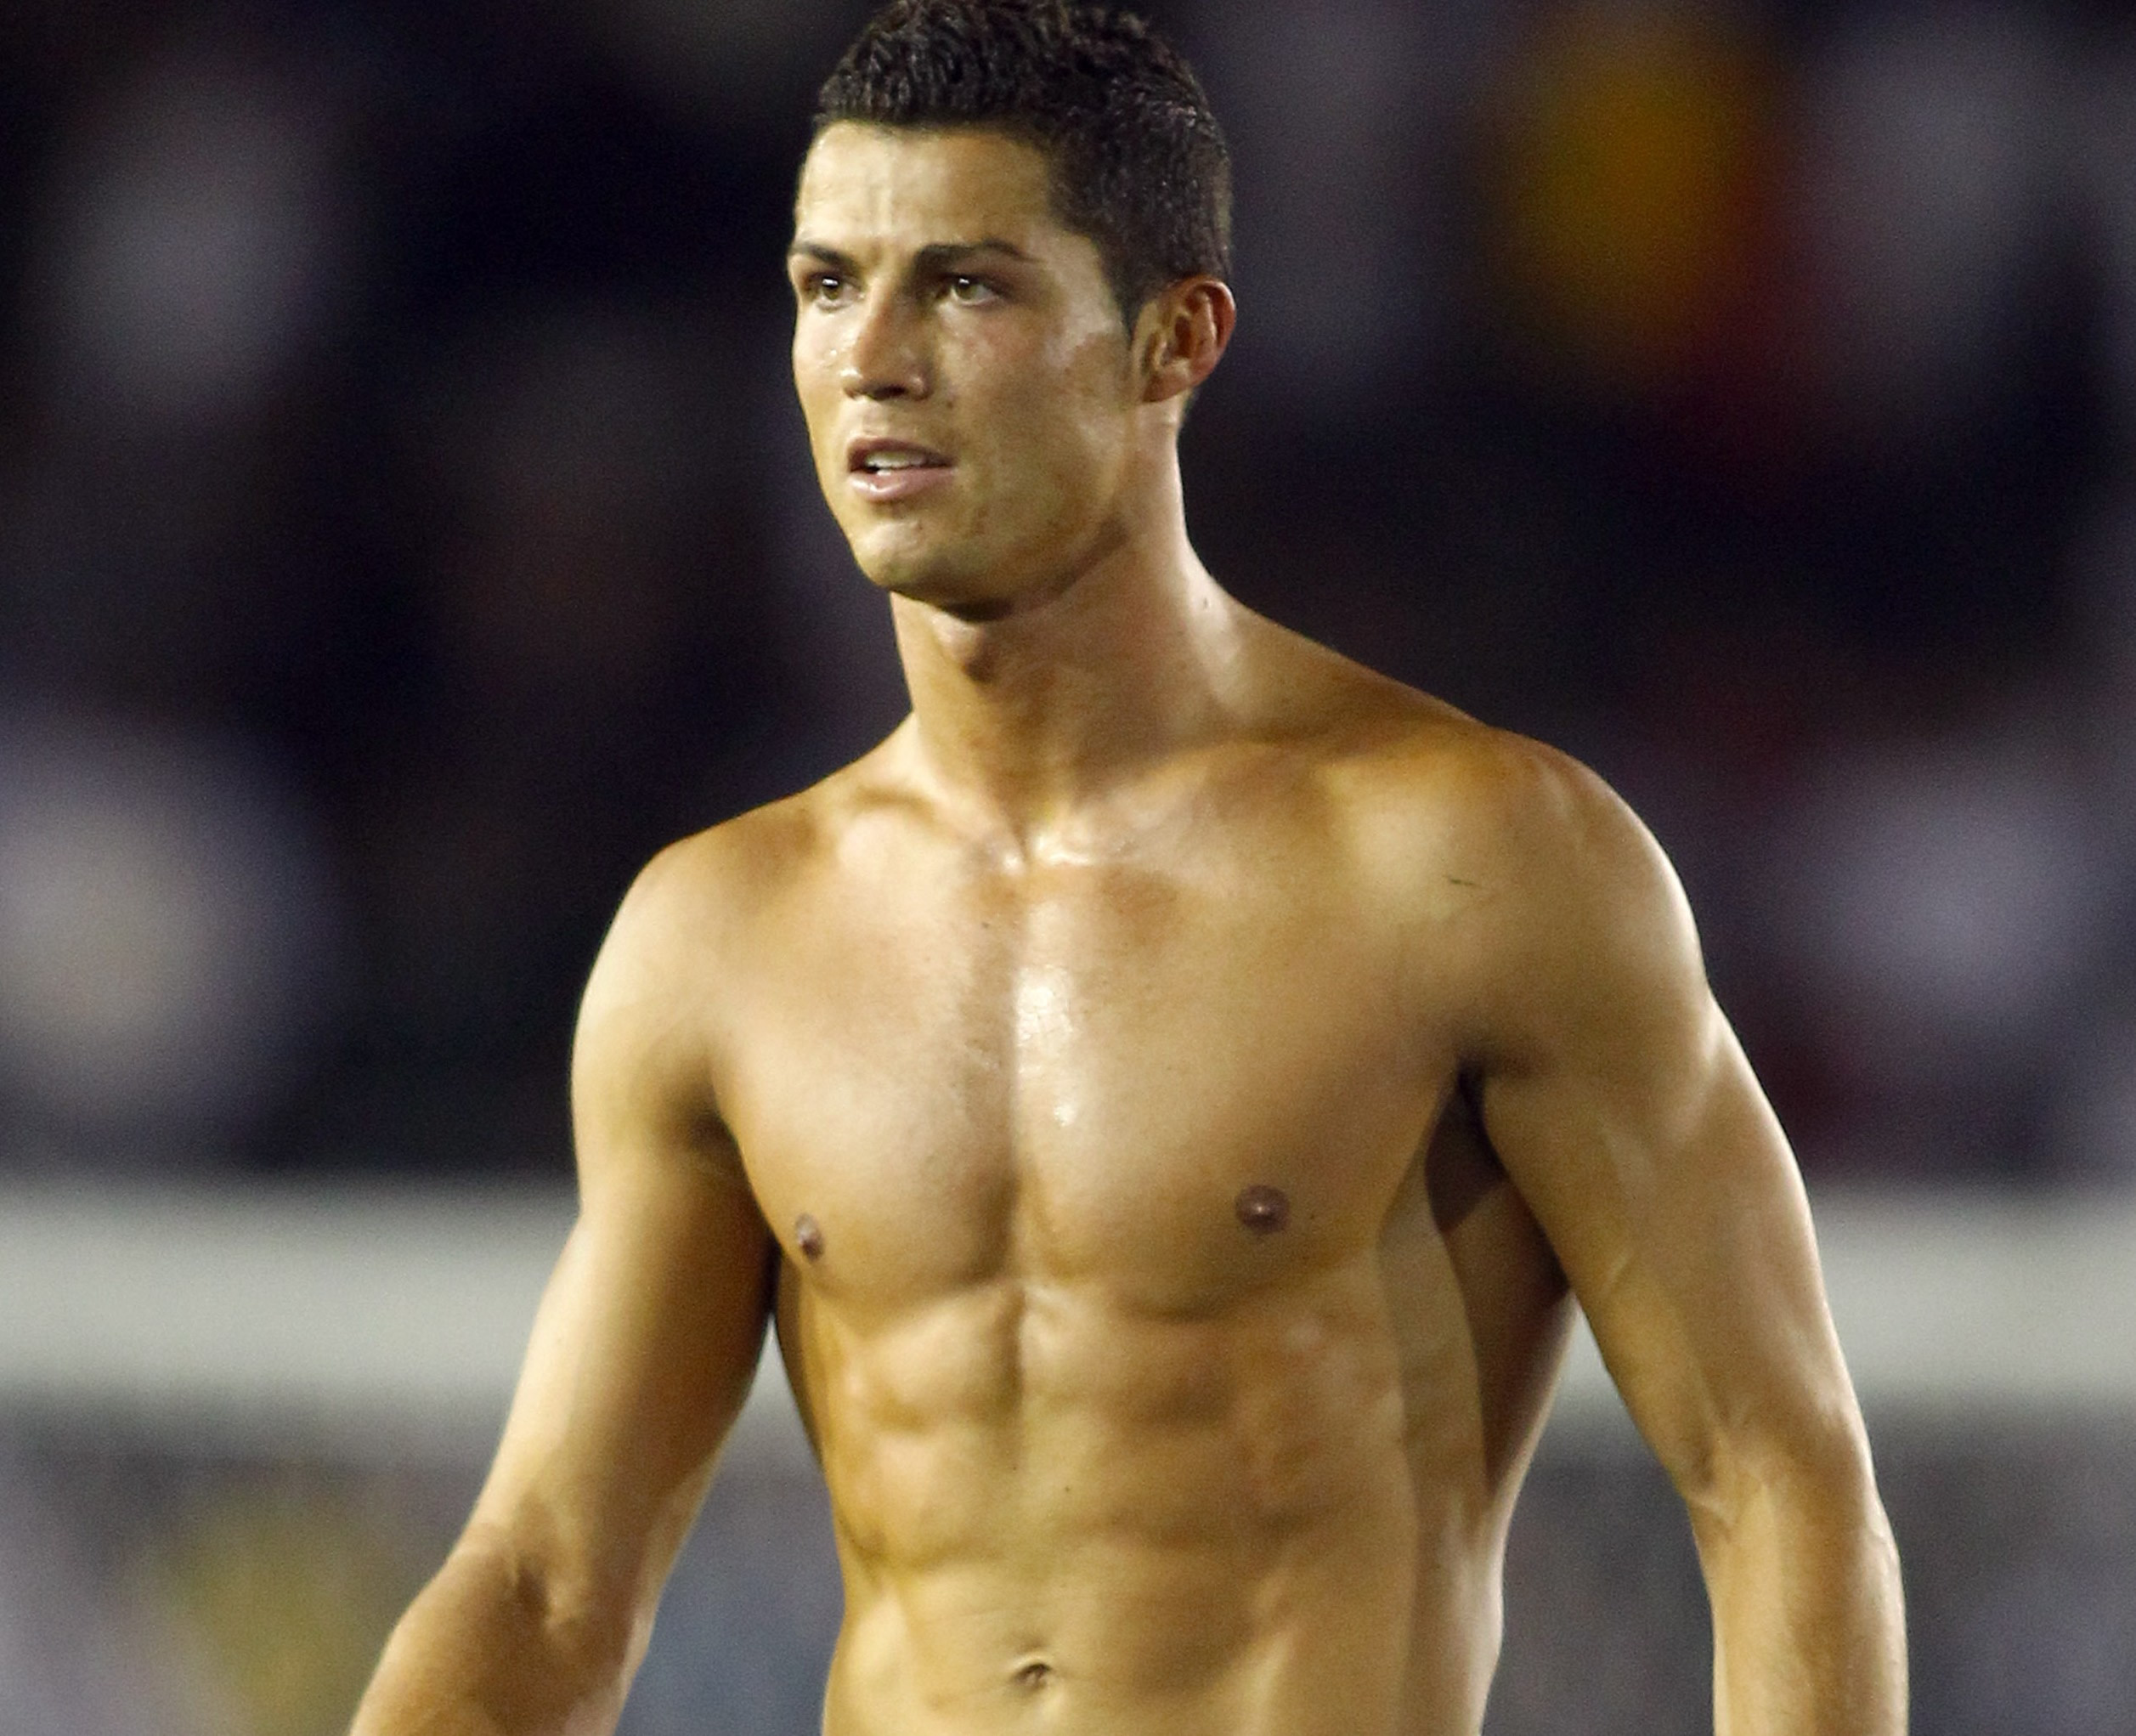 Cristiano Ronaldo Shirtless Body Wallpaper - Male Professional Soccer Player - HD Wallpaper 